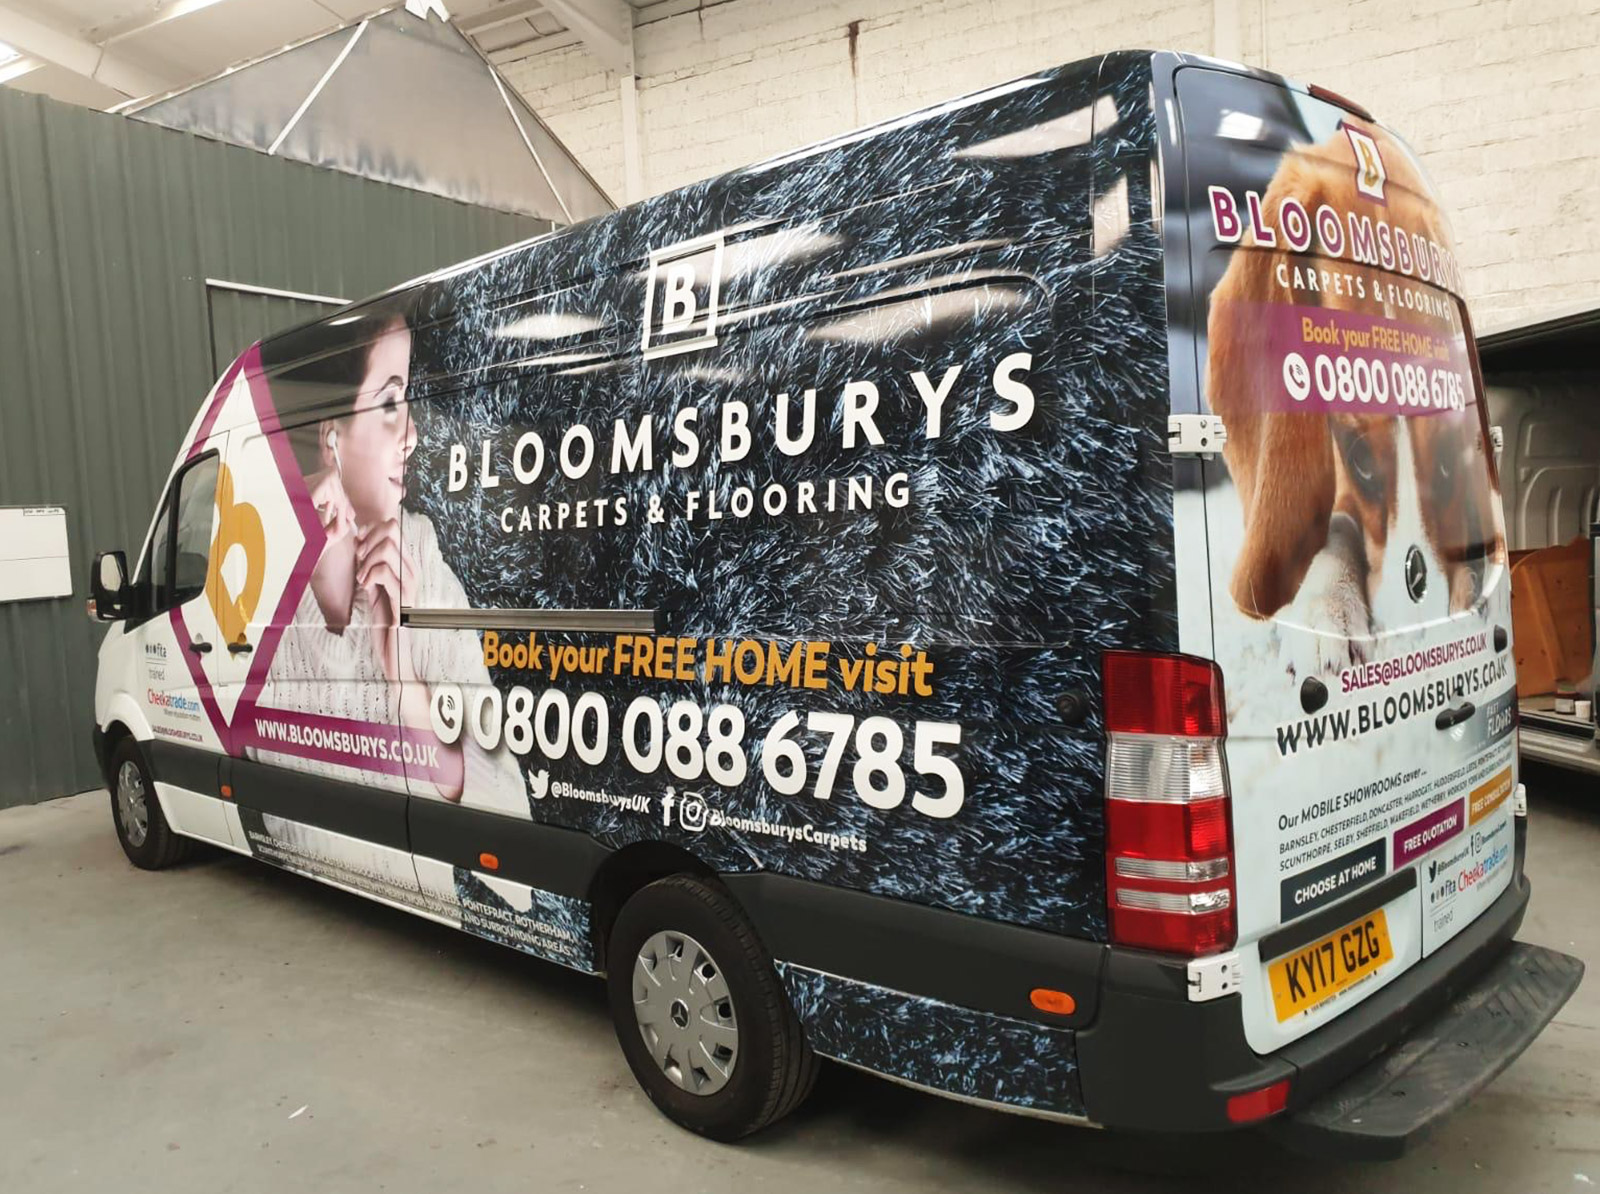 Bloomsburys’ Vehicle Livery